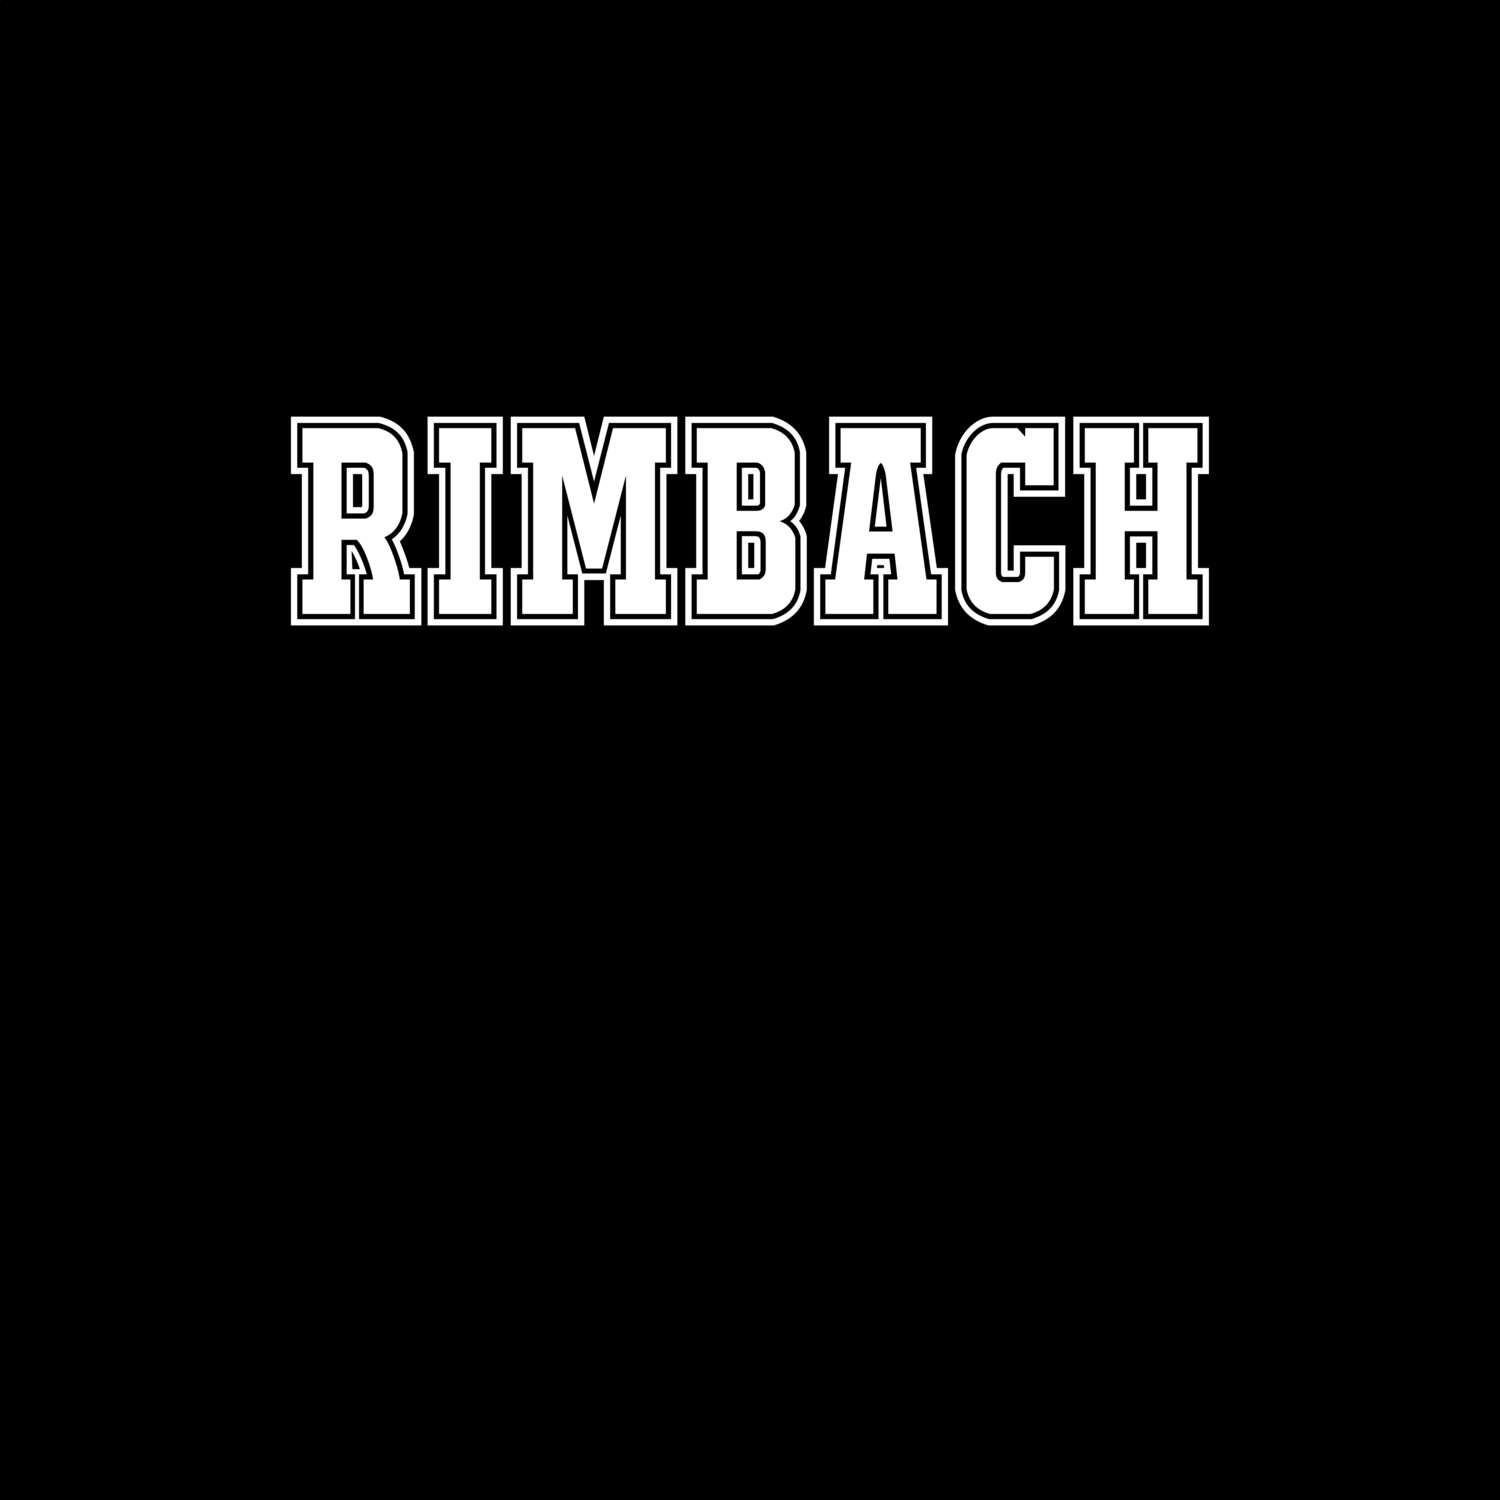 Rimbach T-Shirt »Classic«